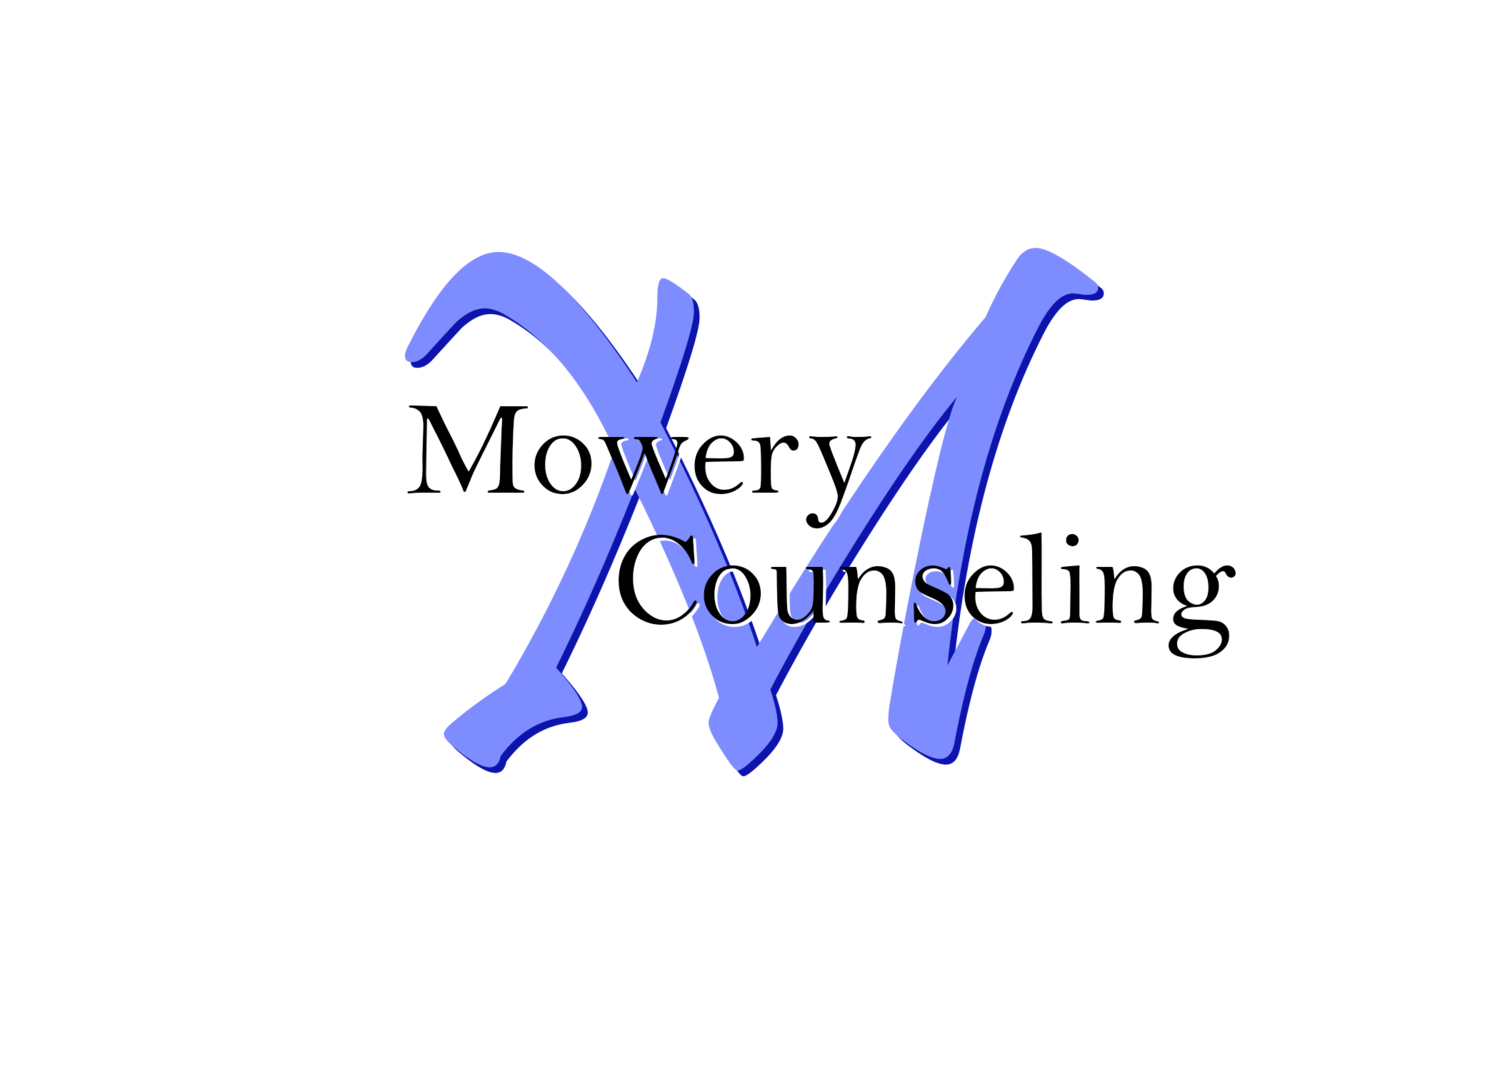 Mowery Counseling